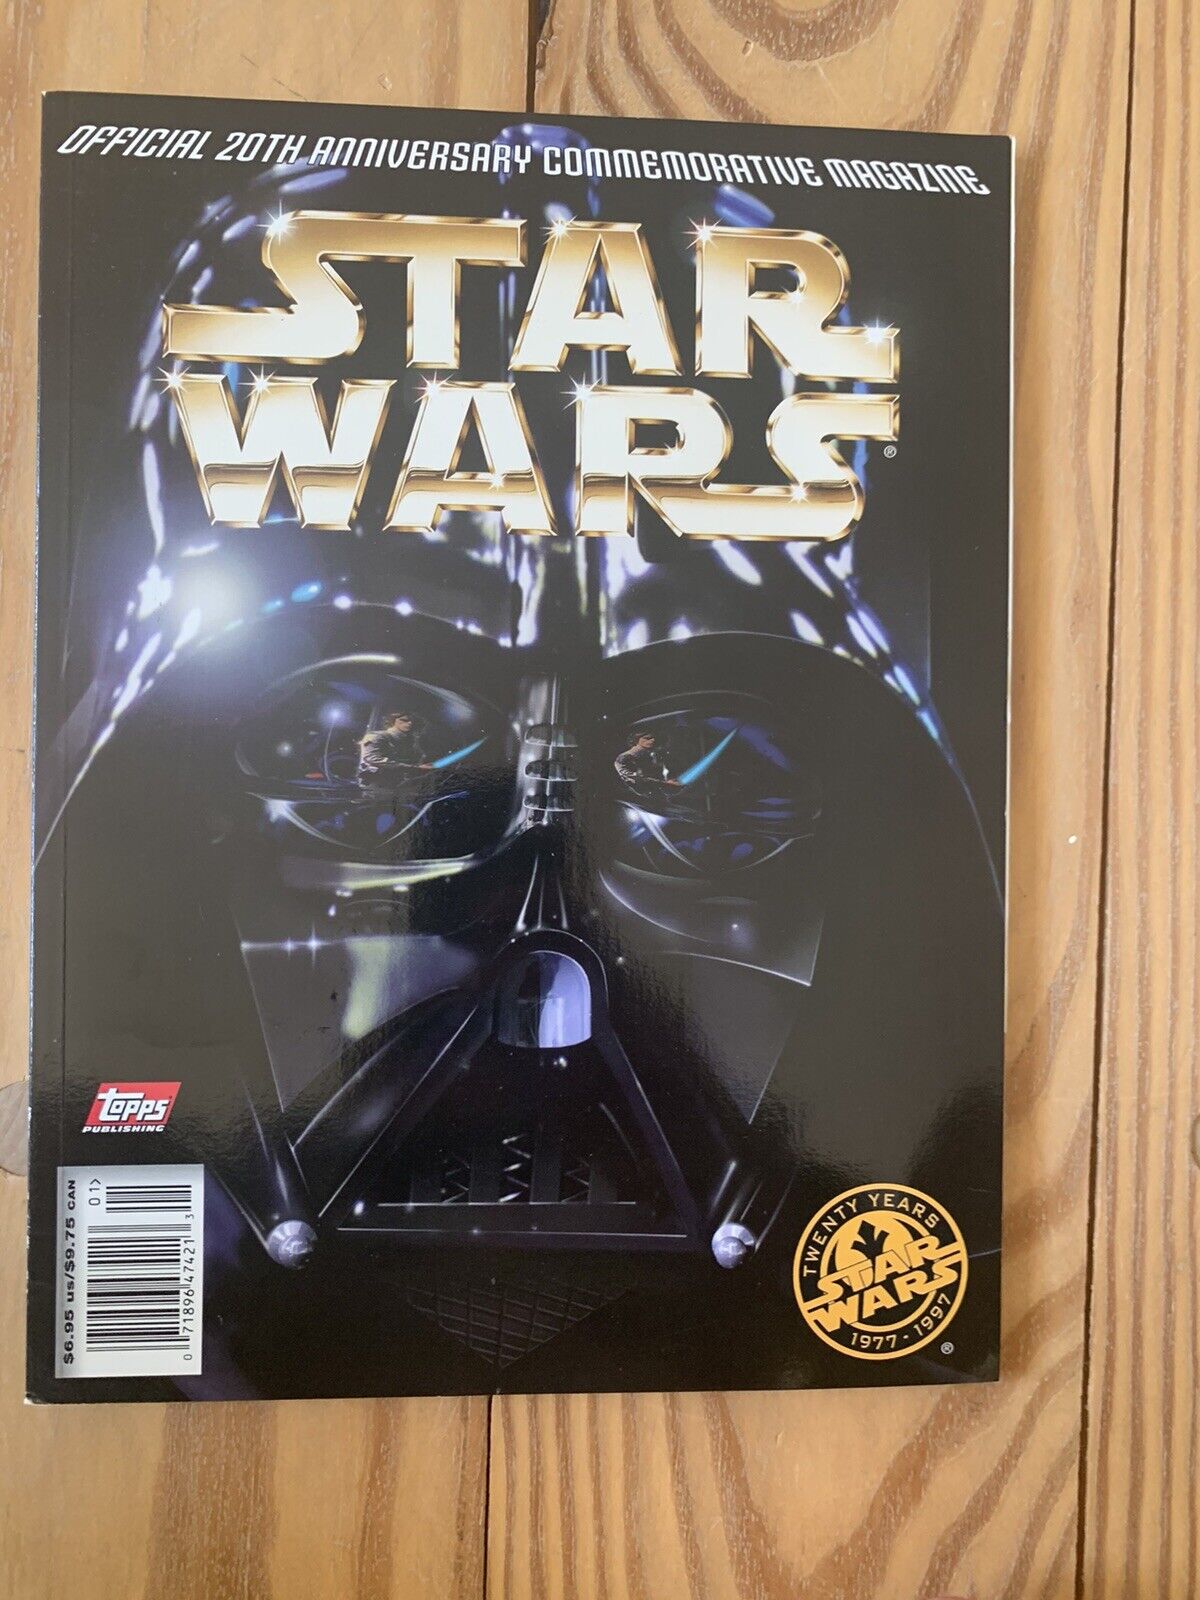 1997 Topps Star Wars 20th Anniversary Commemorative Magazine